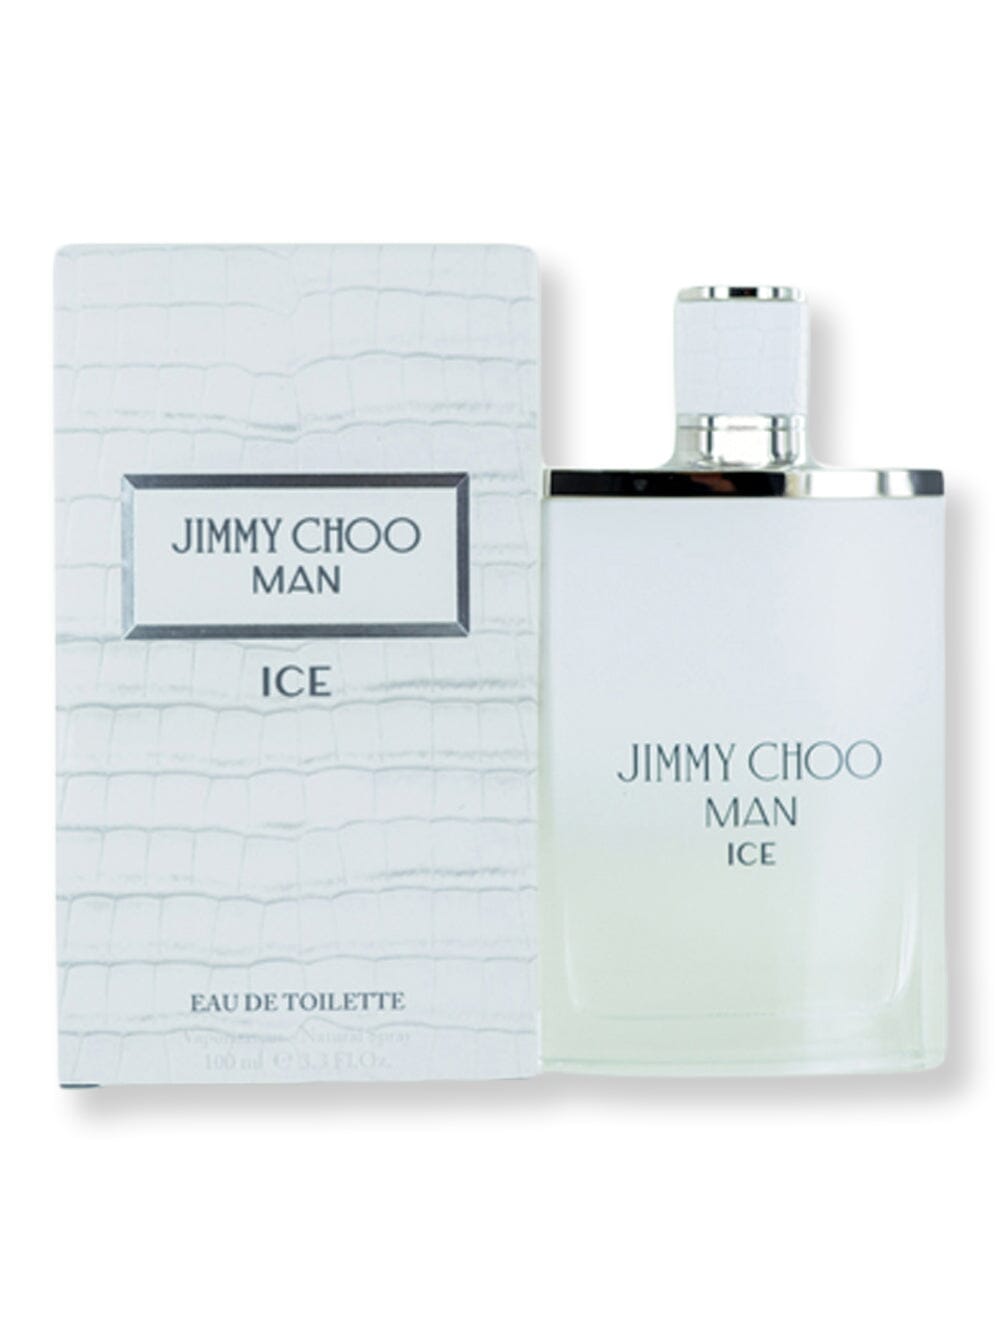 Jimmy Choo Jimmy Choo Man Ice EDT Spray 3.3 oz100 ml Perfume 